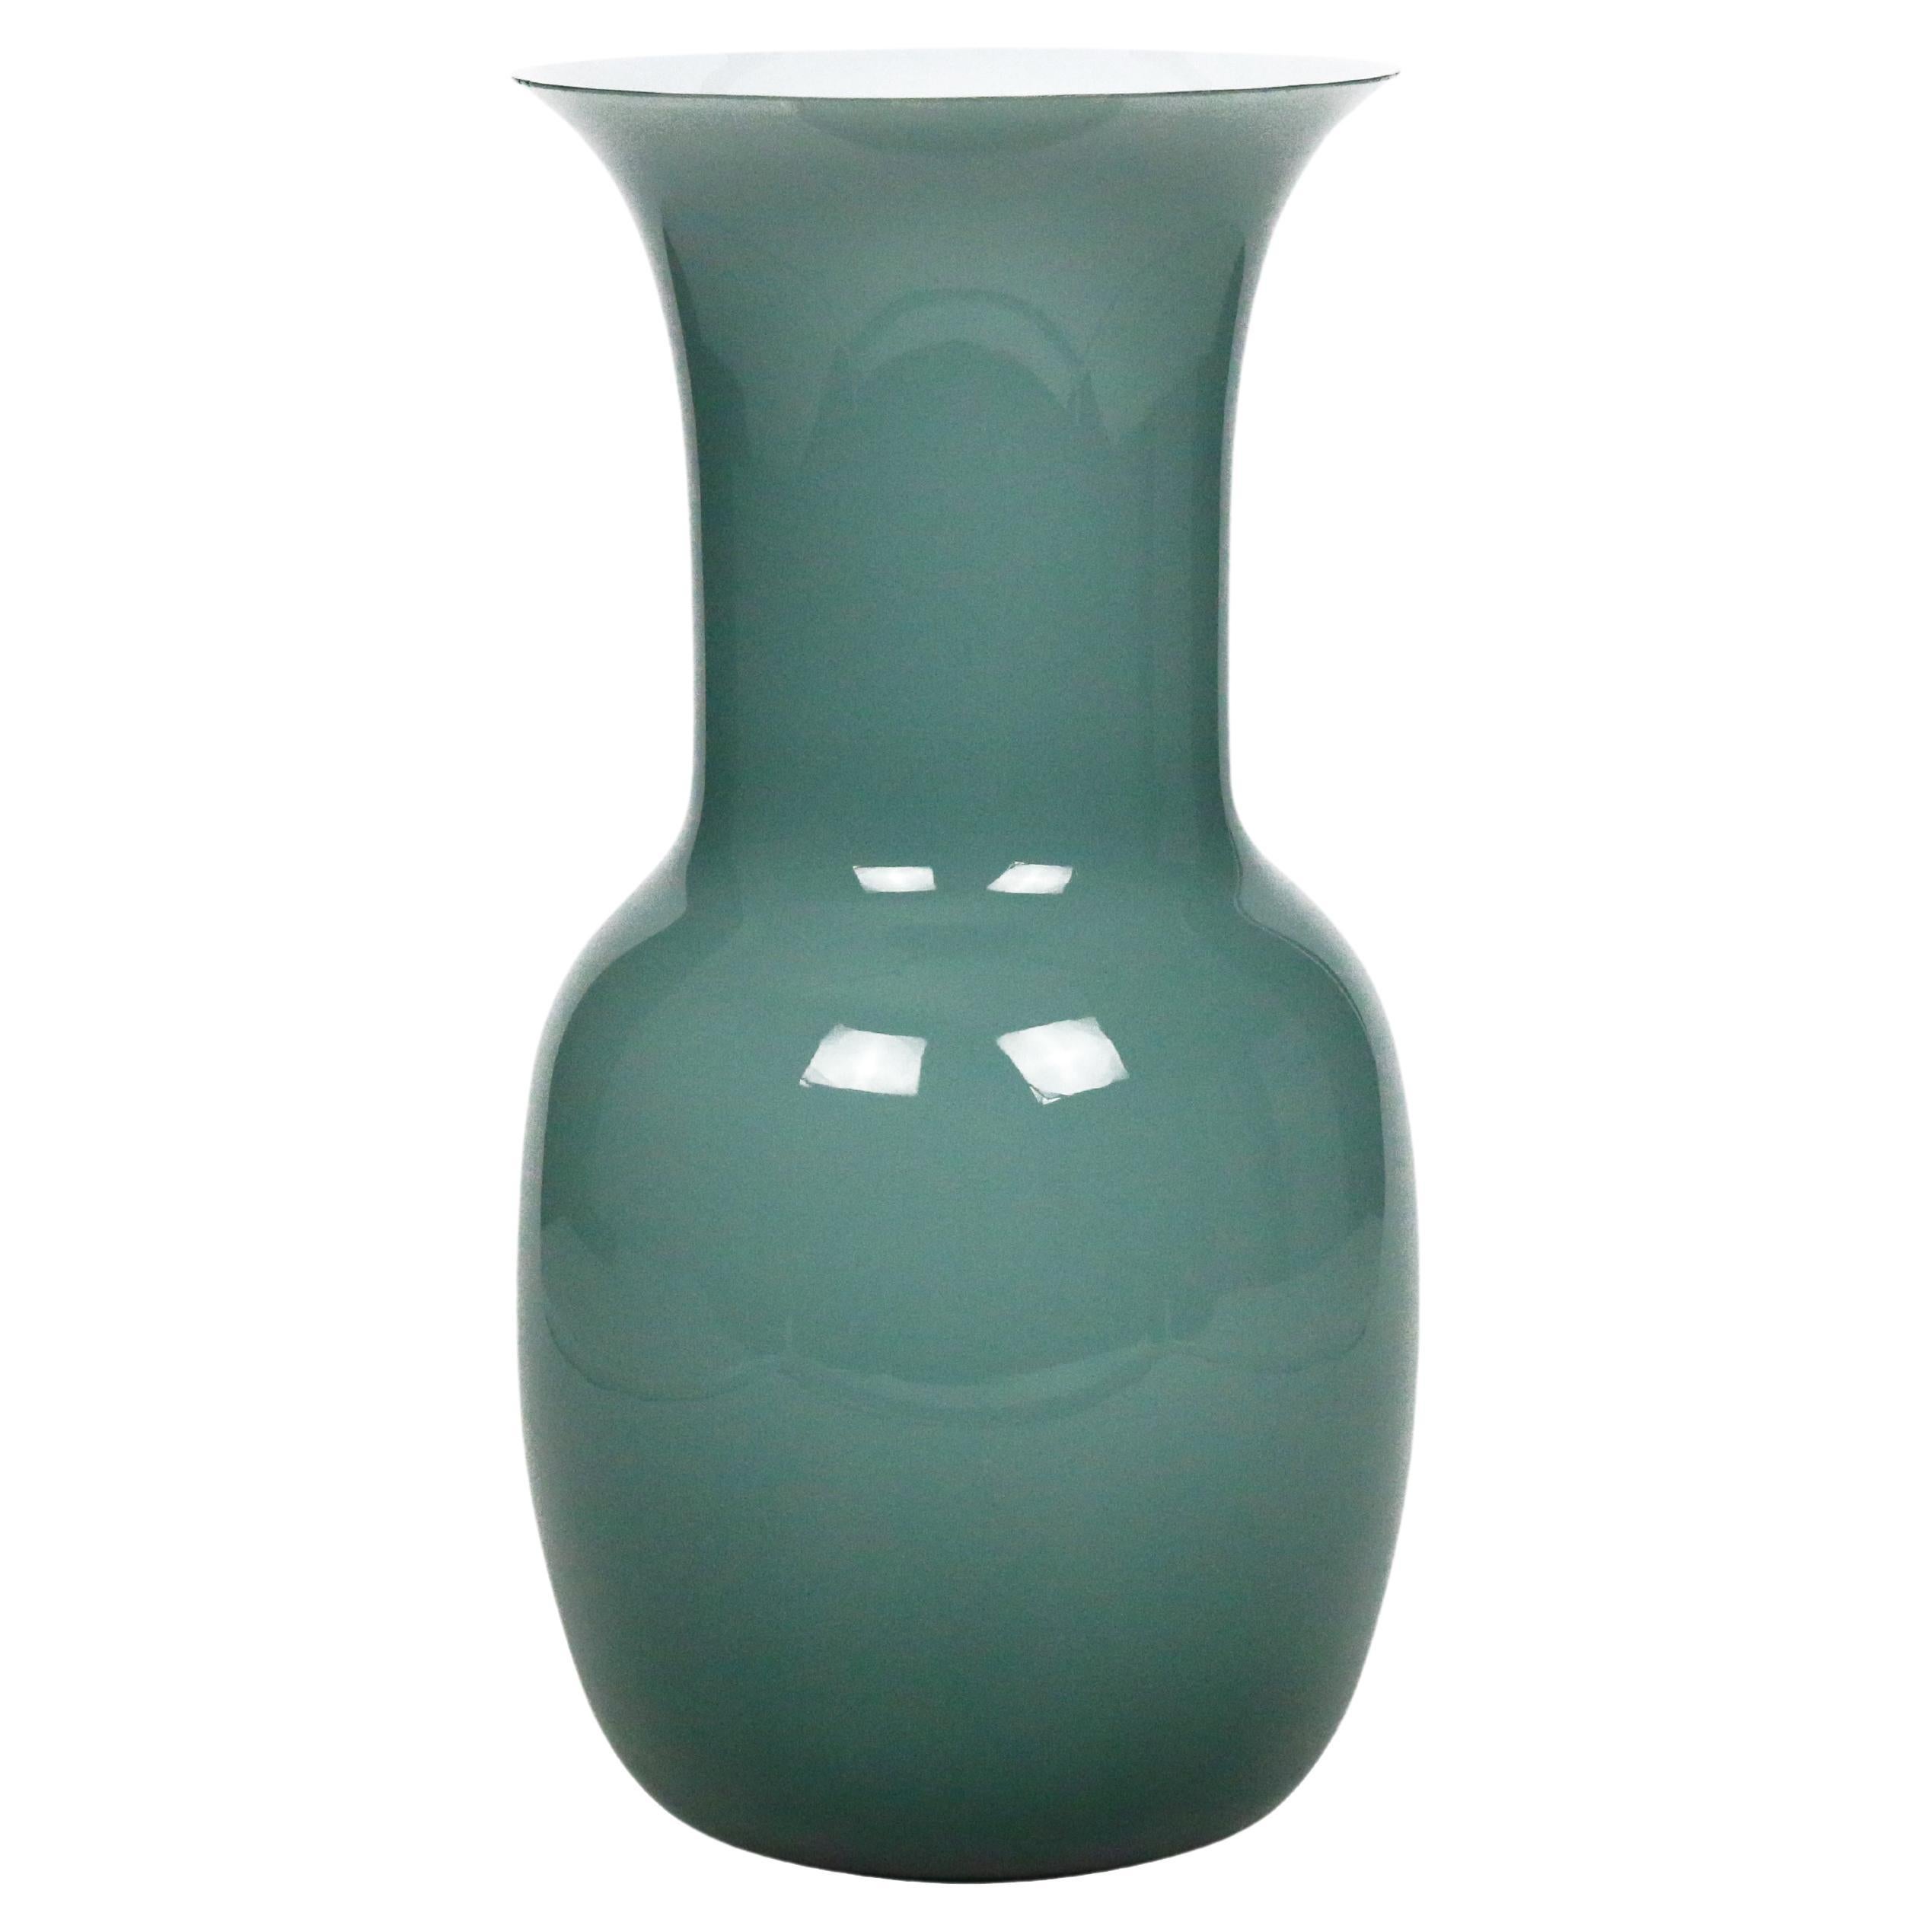 1295 Murano Hand Made "Ca Savio" White and Petroleum Green, Small Size Vase